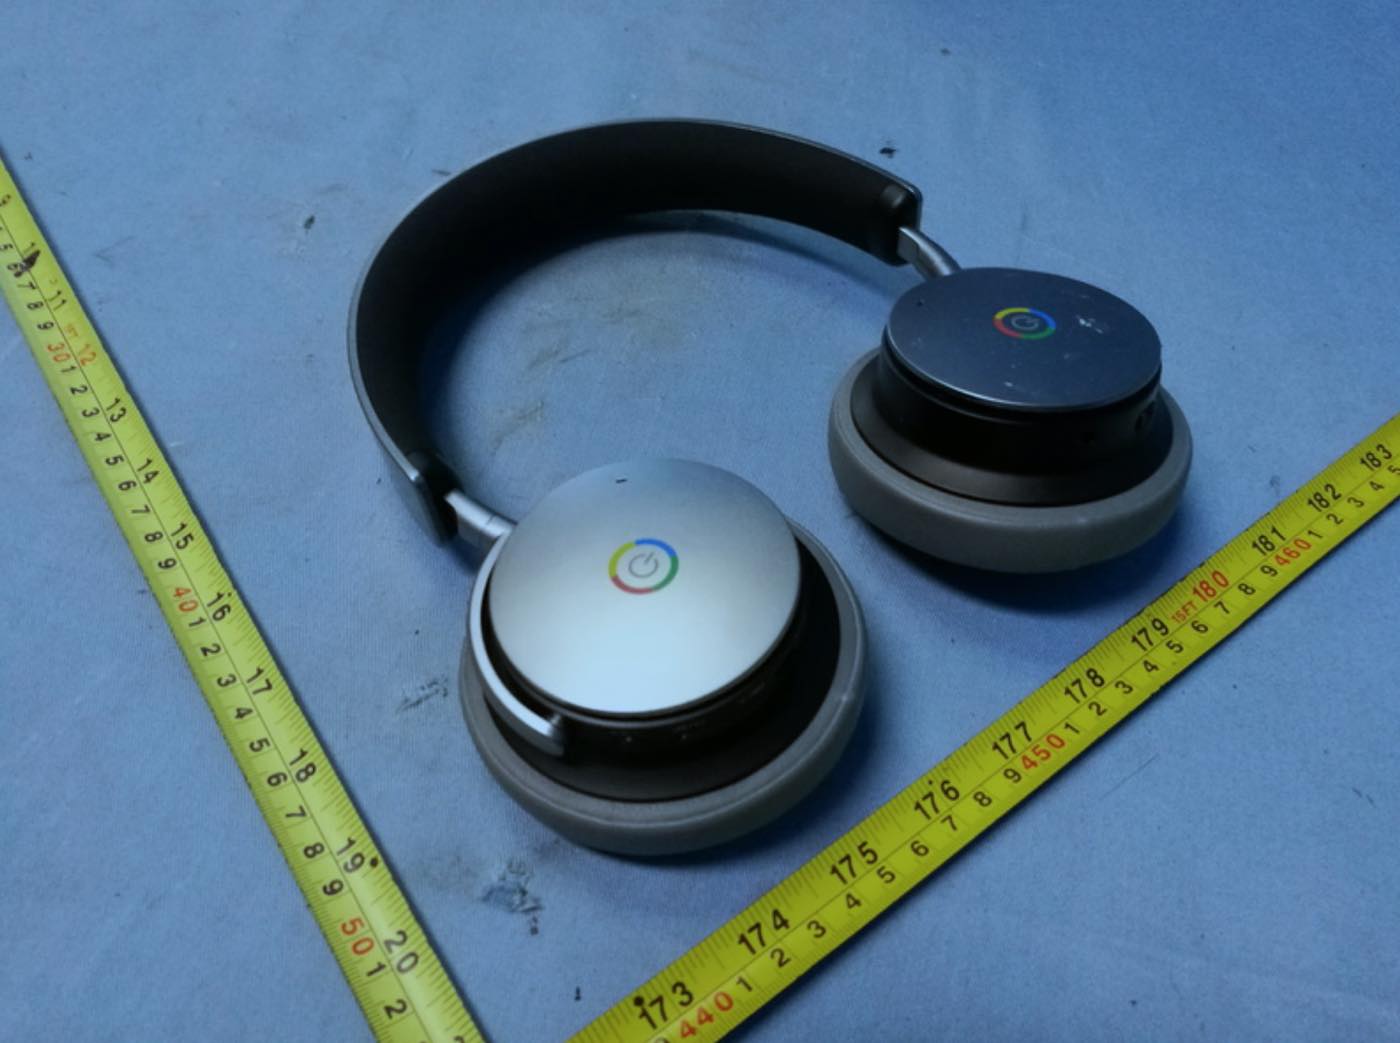 Googleの独自ブランドのワイヤレスヘッドフォンの存在が明らかに ｰ ただし社員向け